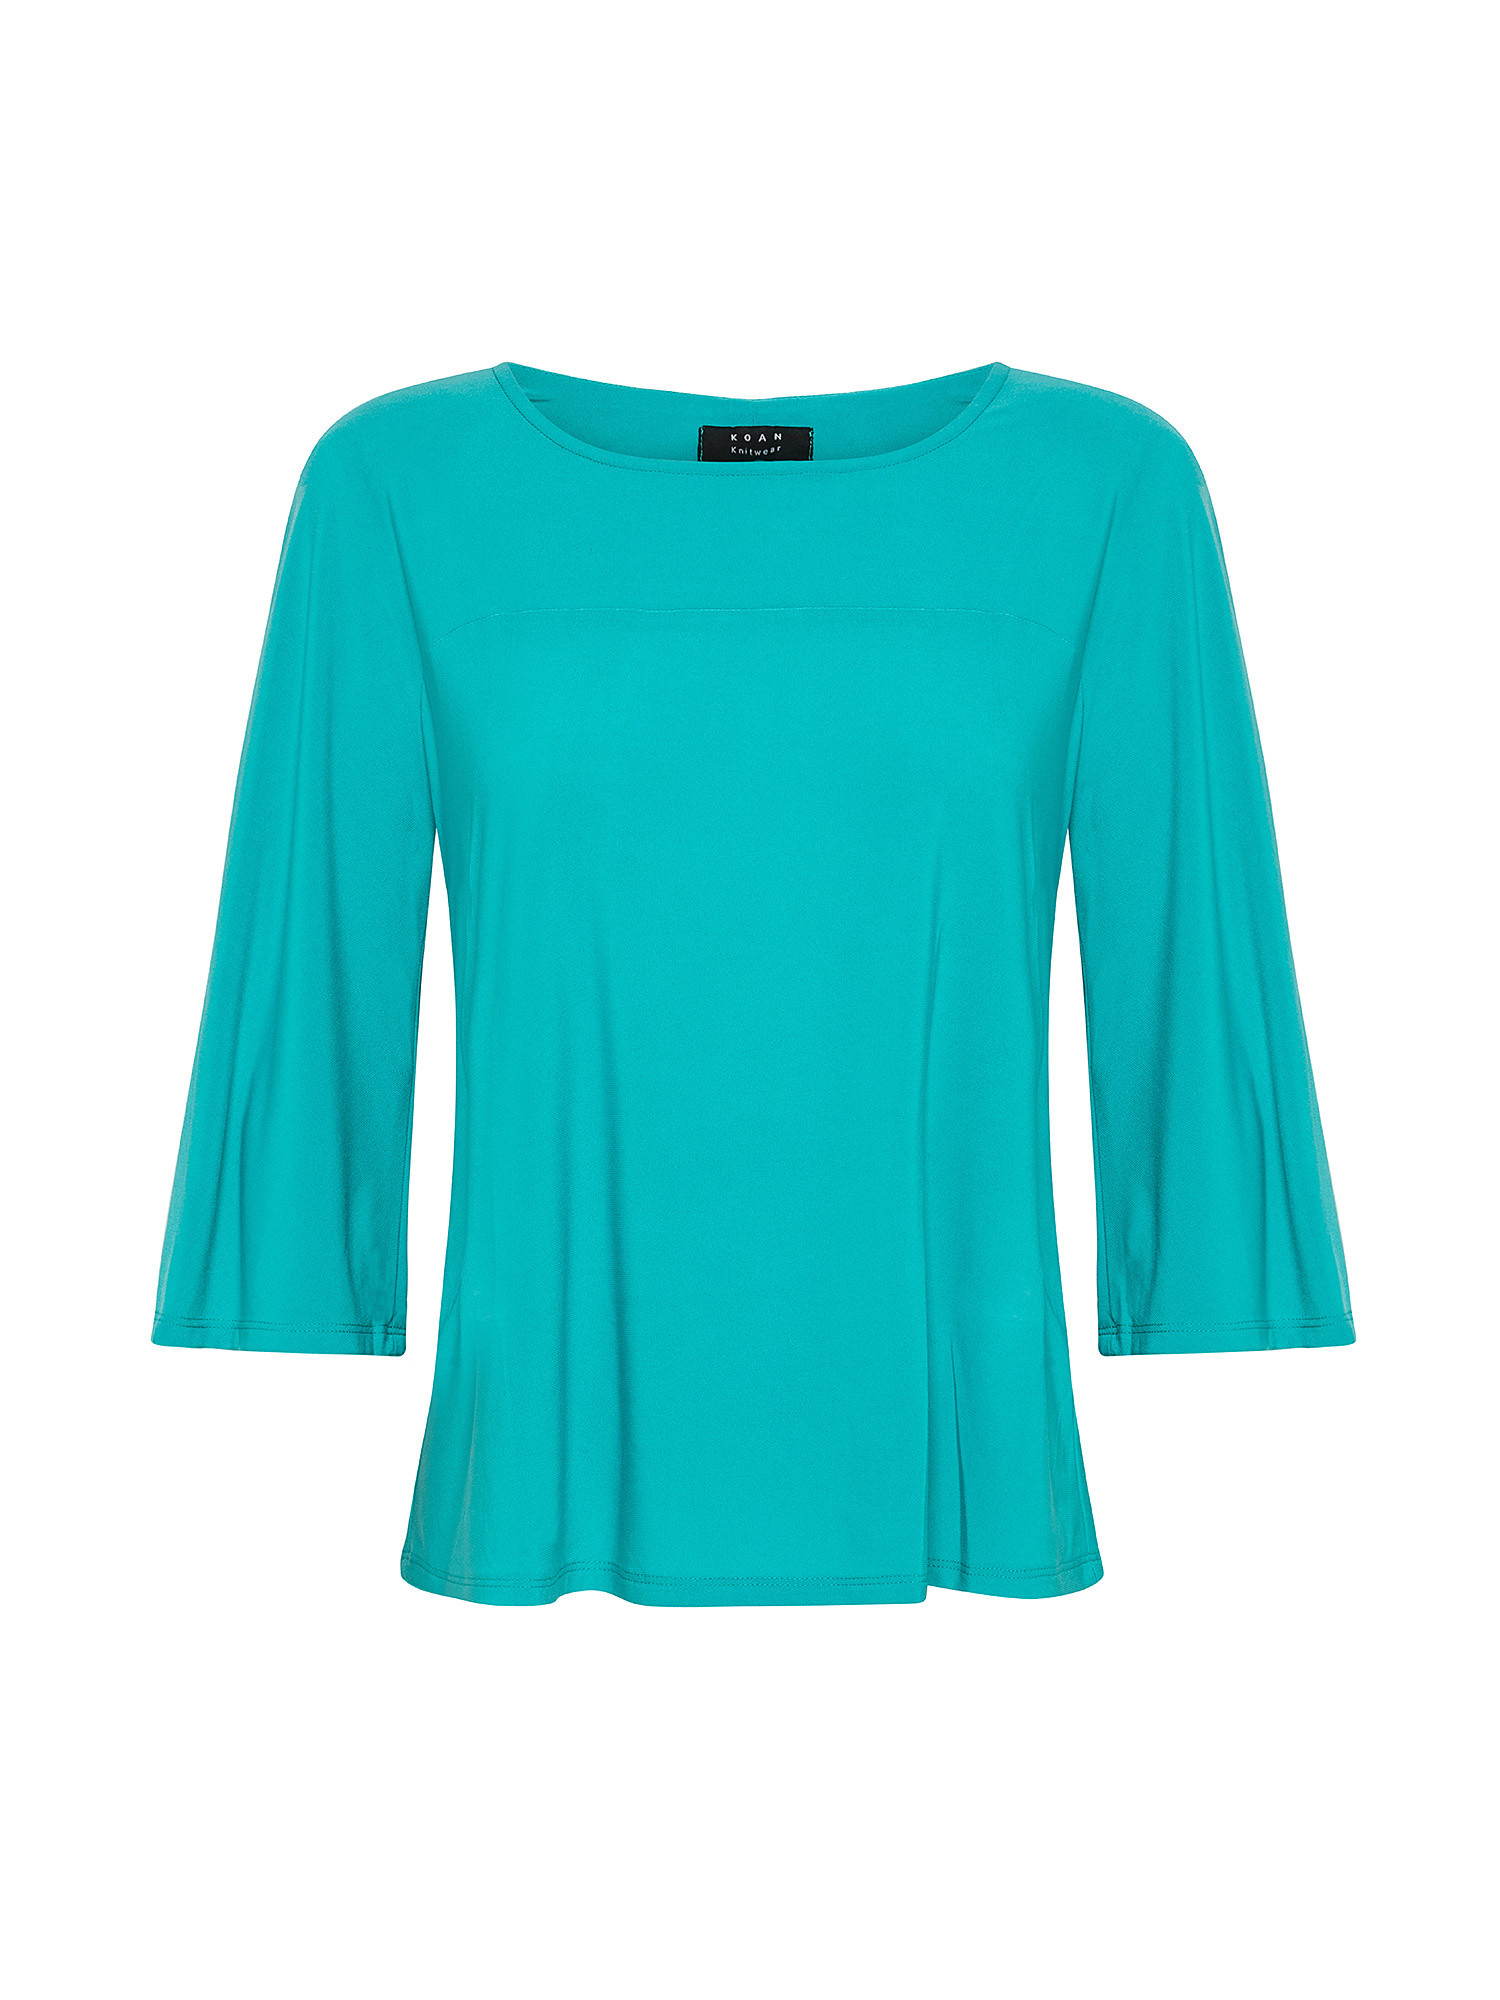 Fluid 3/4 sleeve t-shirt, Turquoise, large image number 0